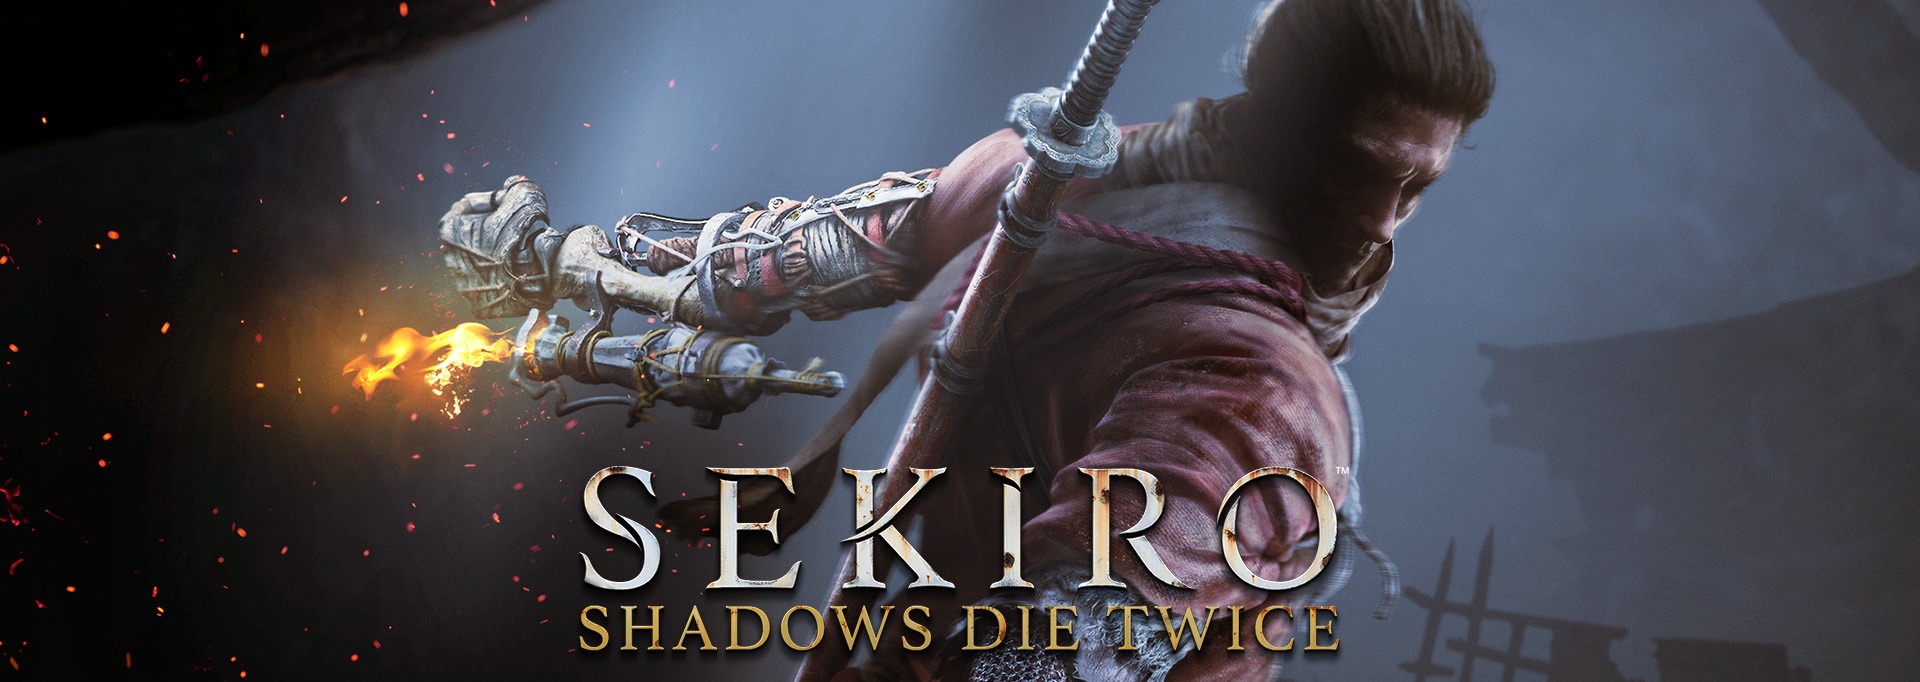 Sekiro shadow die twice купить ключ steam. Sekiro: Shadows die twice. Игра Sekiro Shadows die twice. Секира игра на ПК. Sekiro Shadows die twice лого.